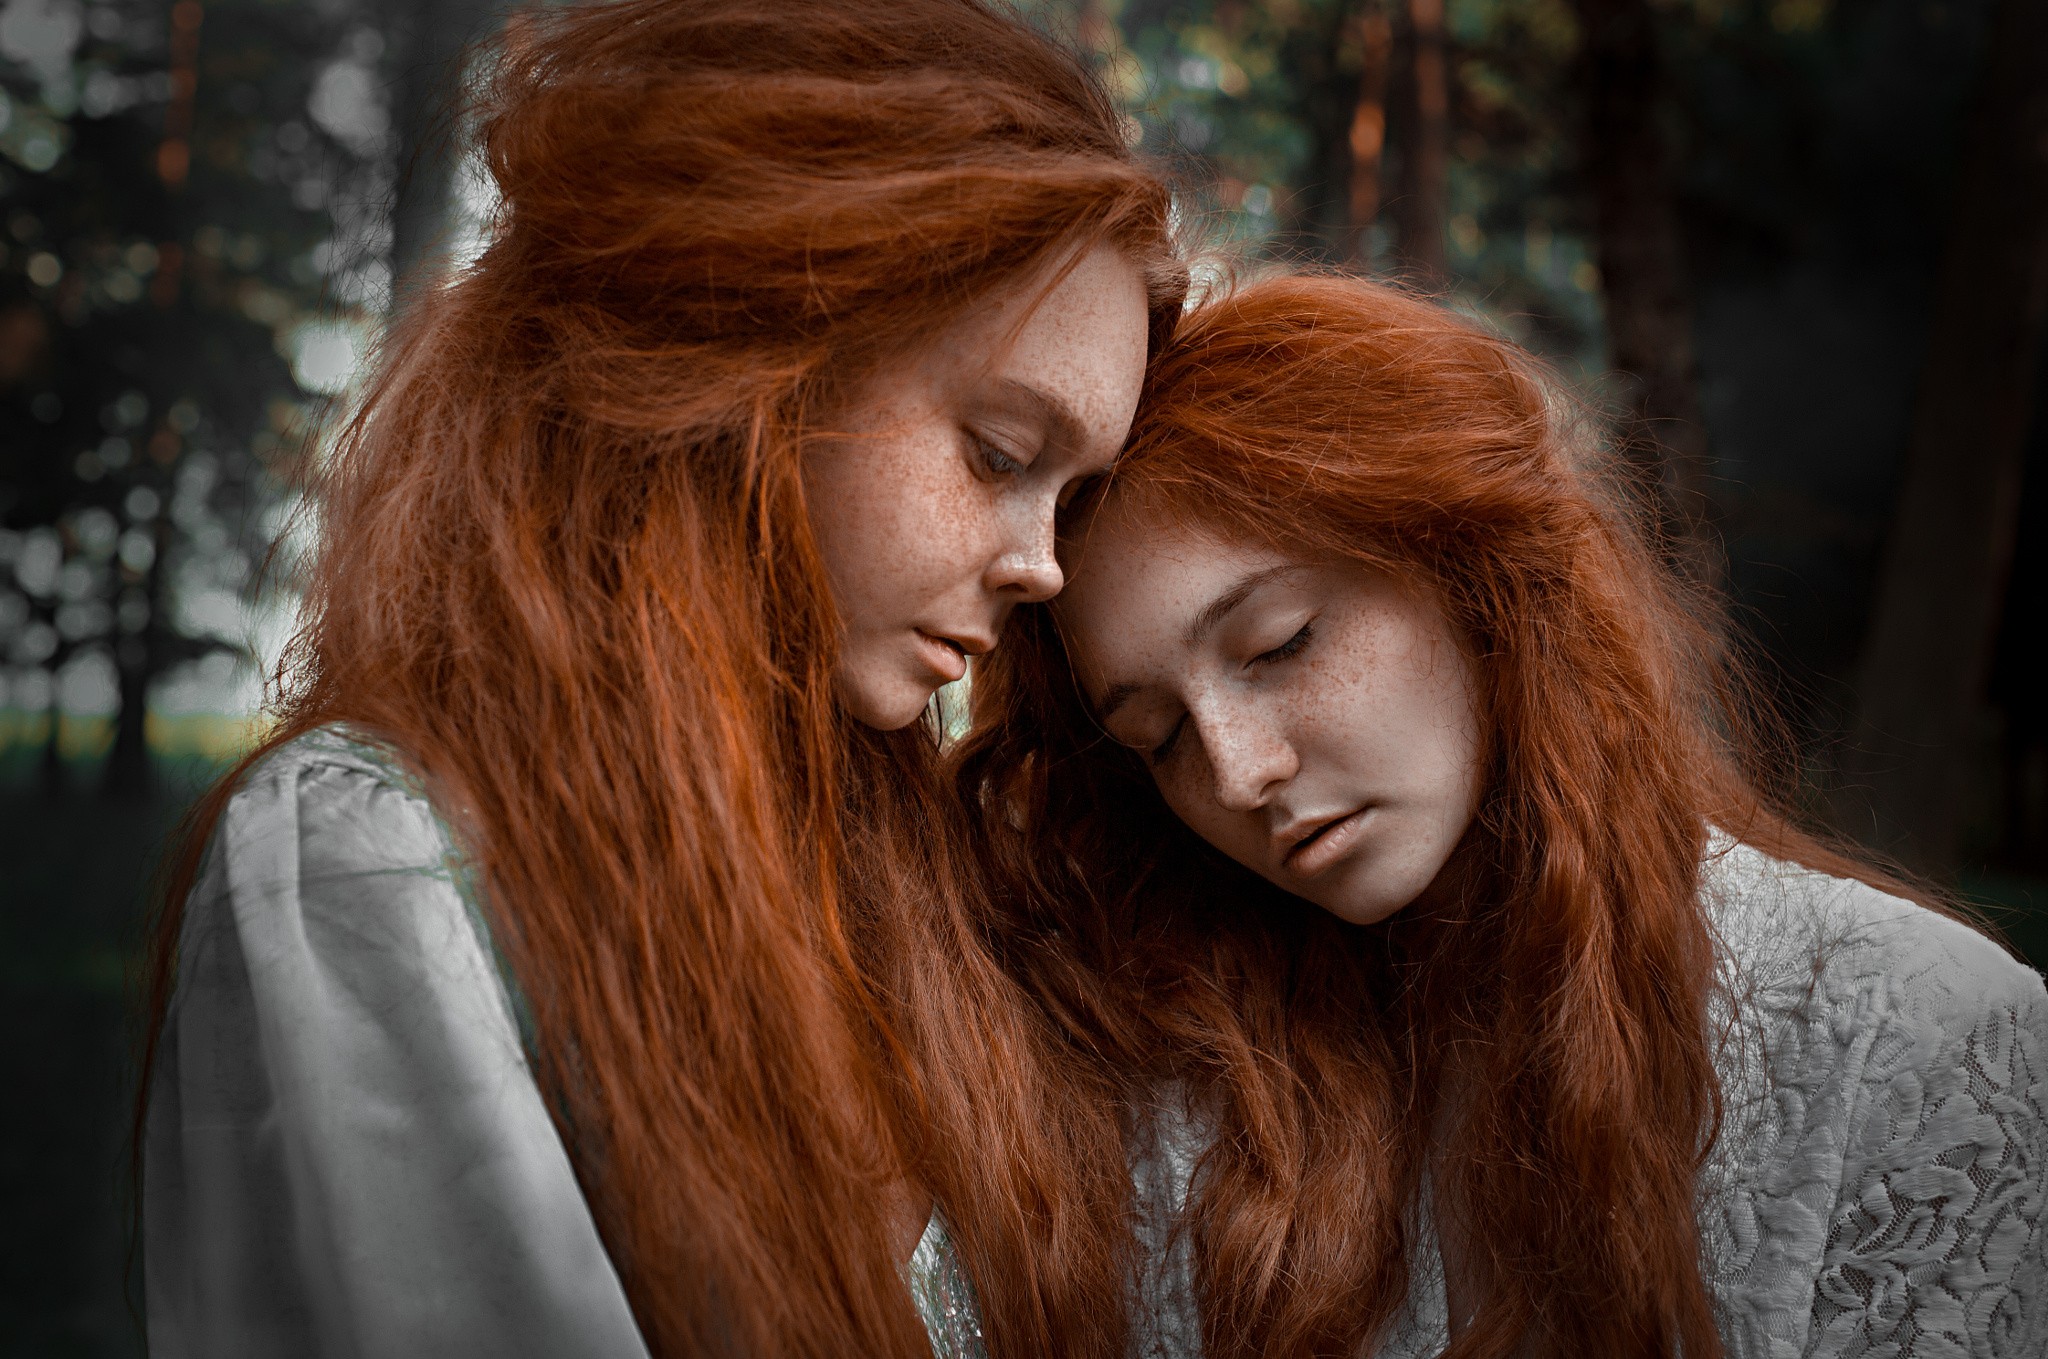 People 2048x1359 women face portrait redhead closed eyes freckles two women outdoors model women outdoors looking away long hair